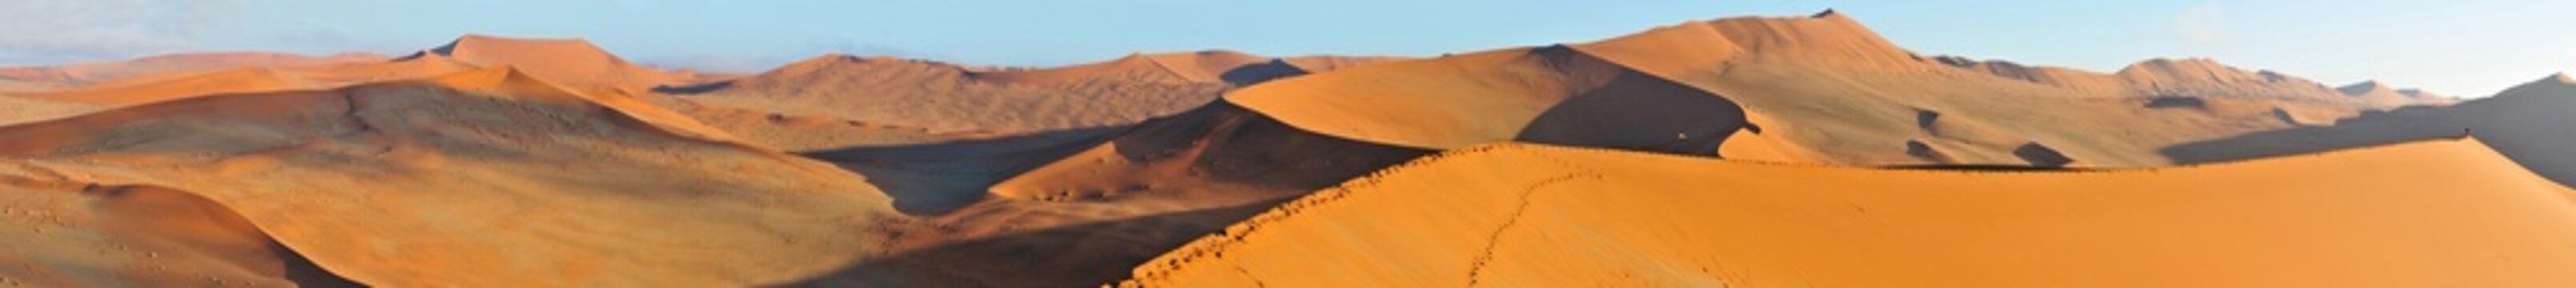 Dune landscape panorama